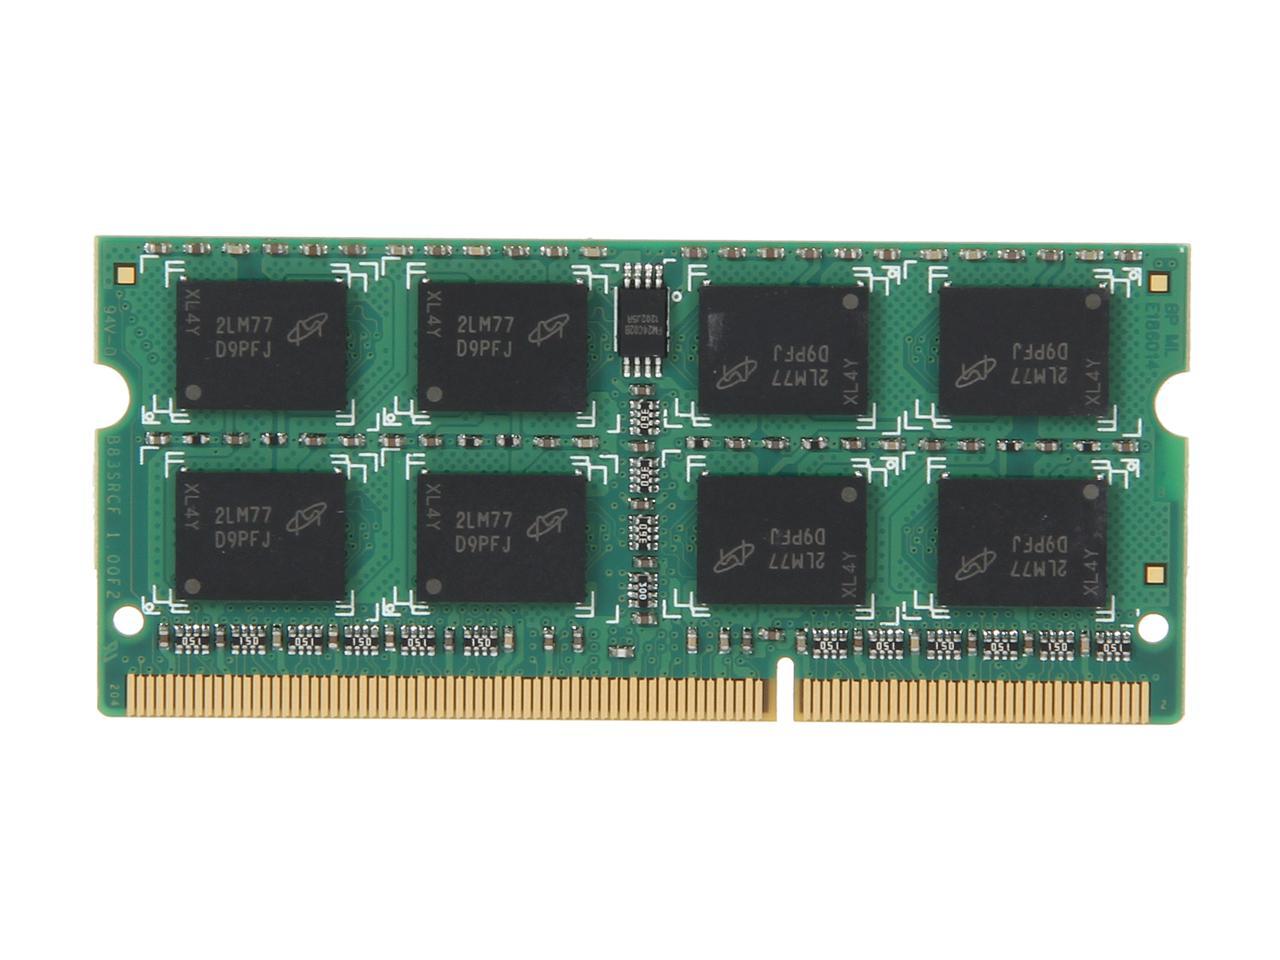 Crucial 4GB DDR3 1066 (PC3 8500) Unbuffered Memory for Mac Model CT4G3S1067M